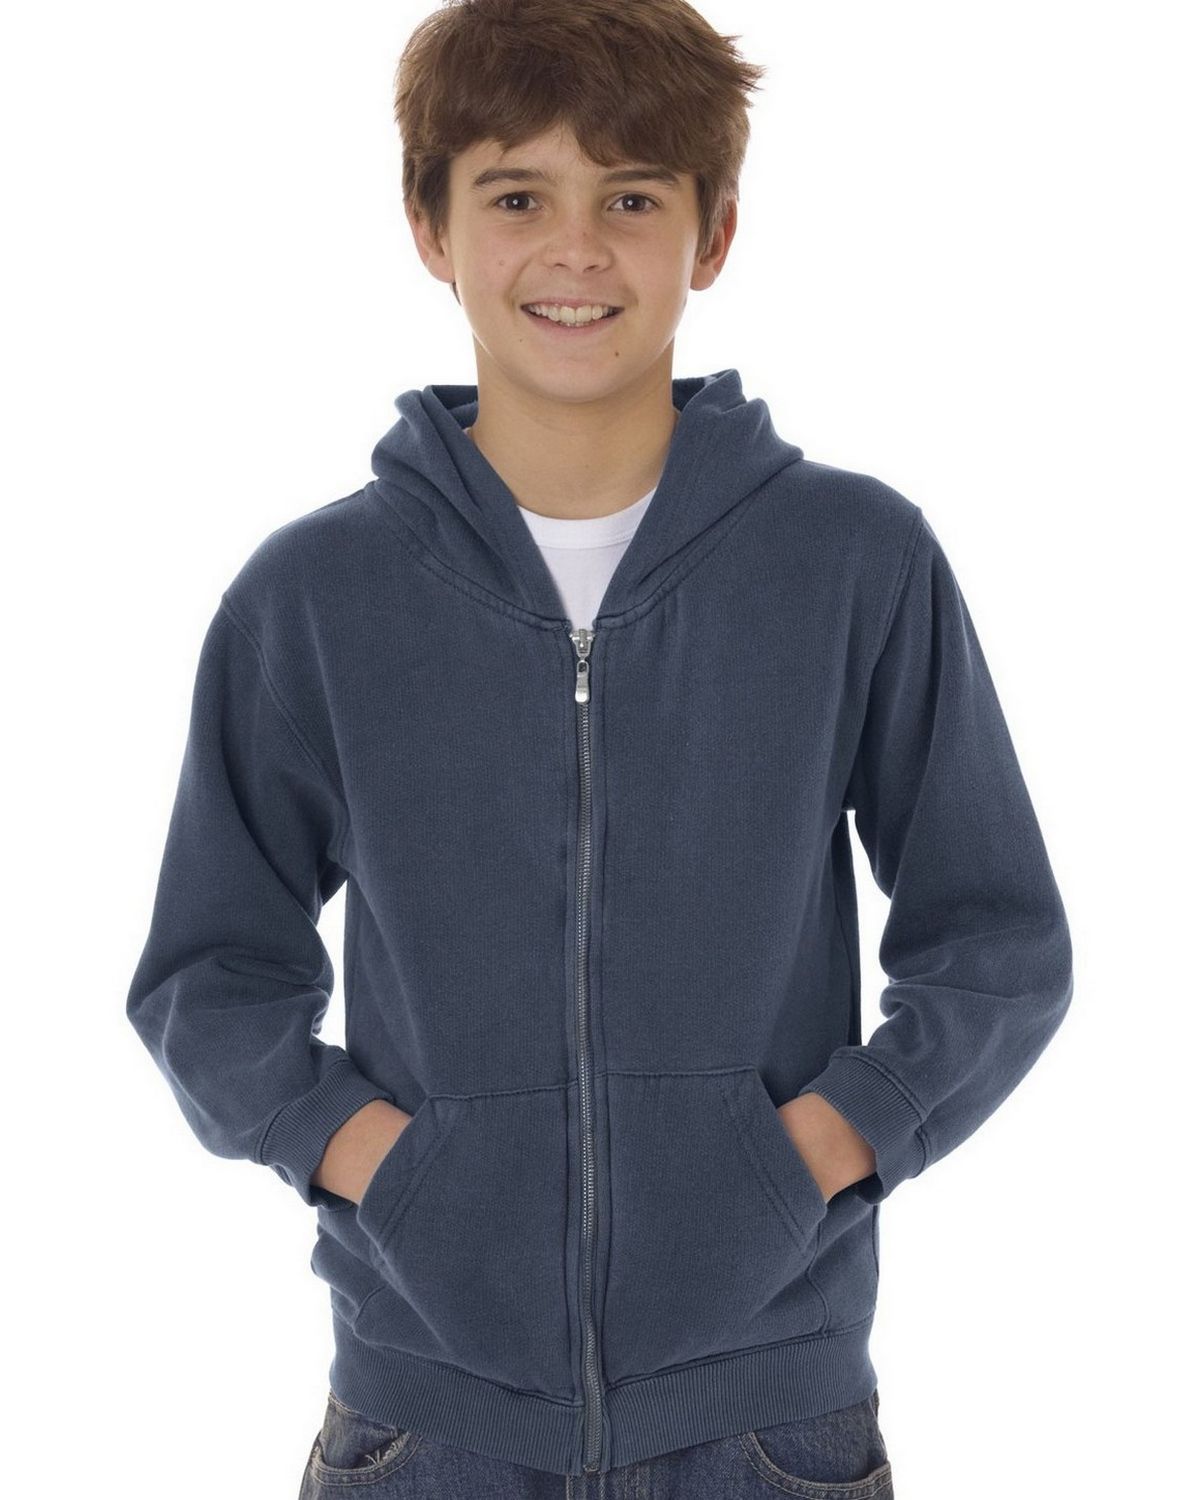 Chouinard 7755 Youth Full-Zip Hooded Sweatshirt - ApparelnBags.com